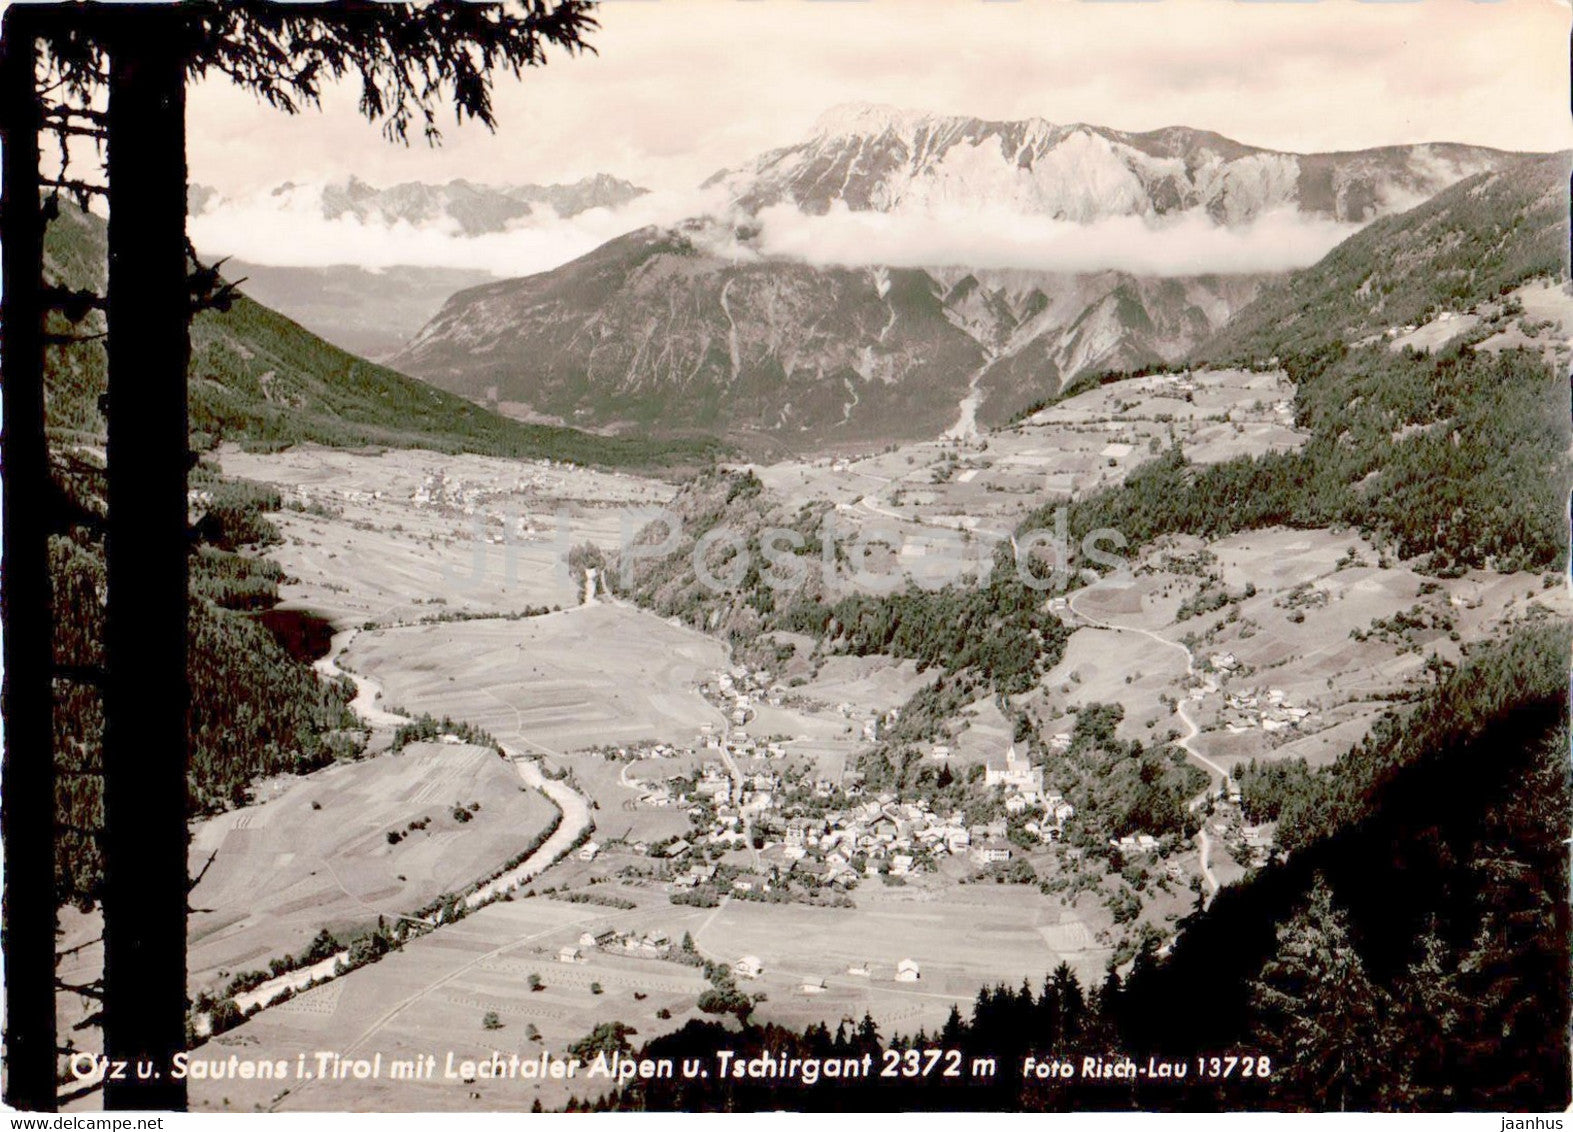 Otz u Sautens i Tirol Lechtaler Alpen u Tschirgant 2372 m - old postcard - Austria - unused - JH Postcards